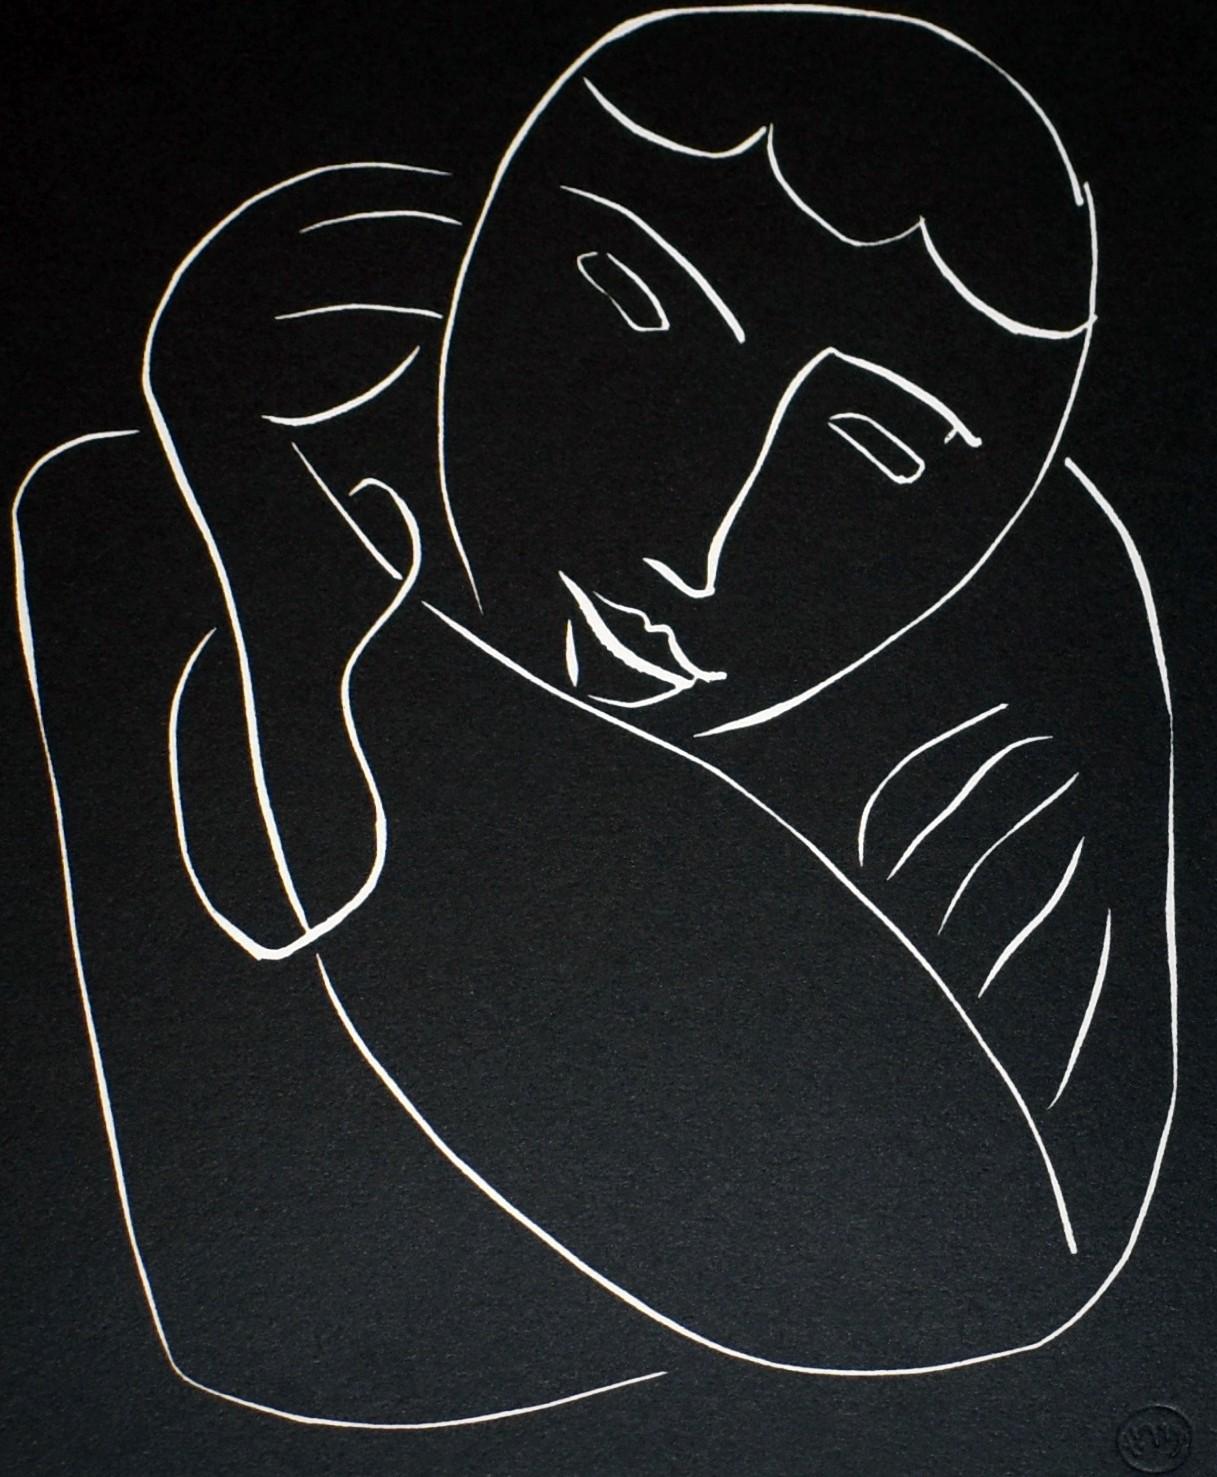 Pasiphae Plate 54 - Print by Henri Matisse